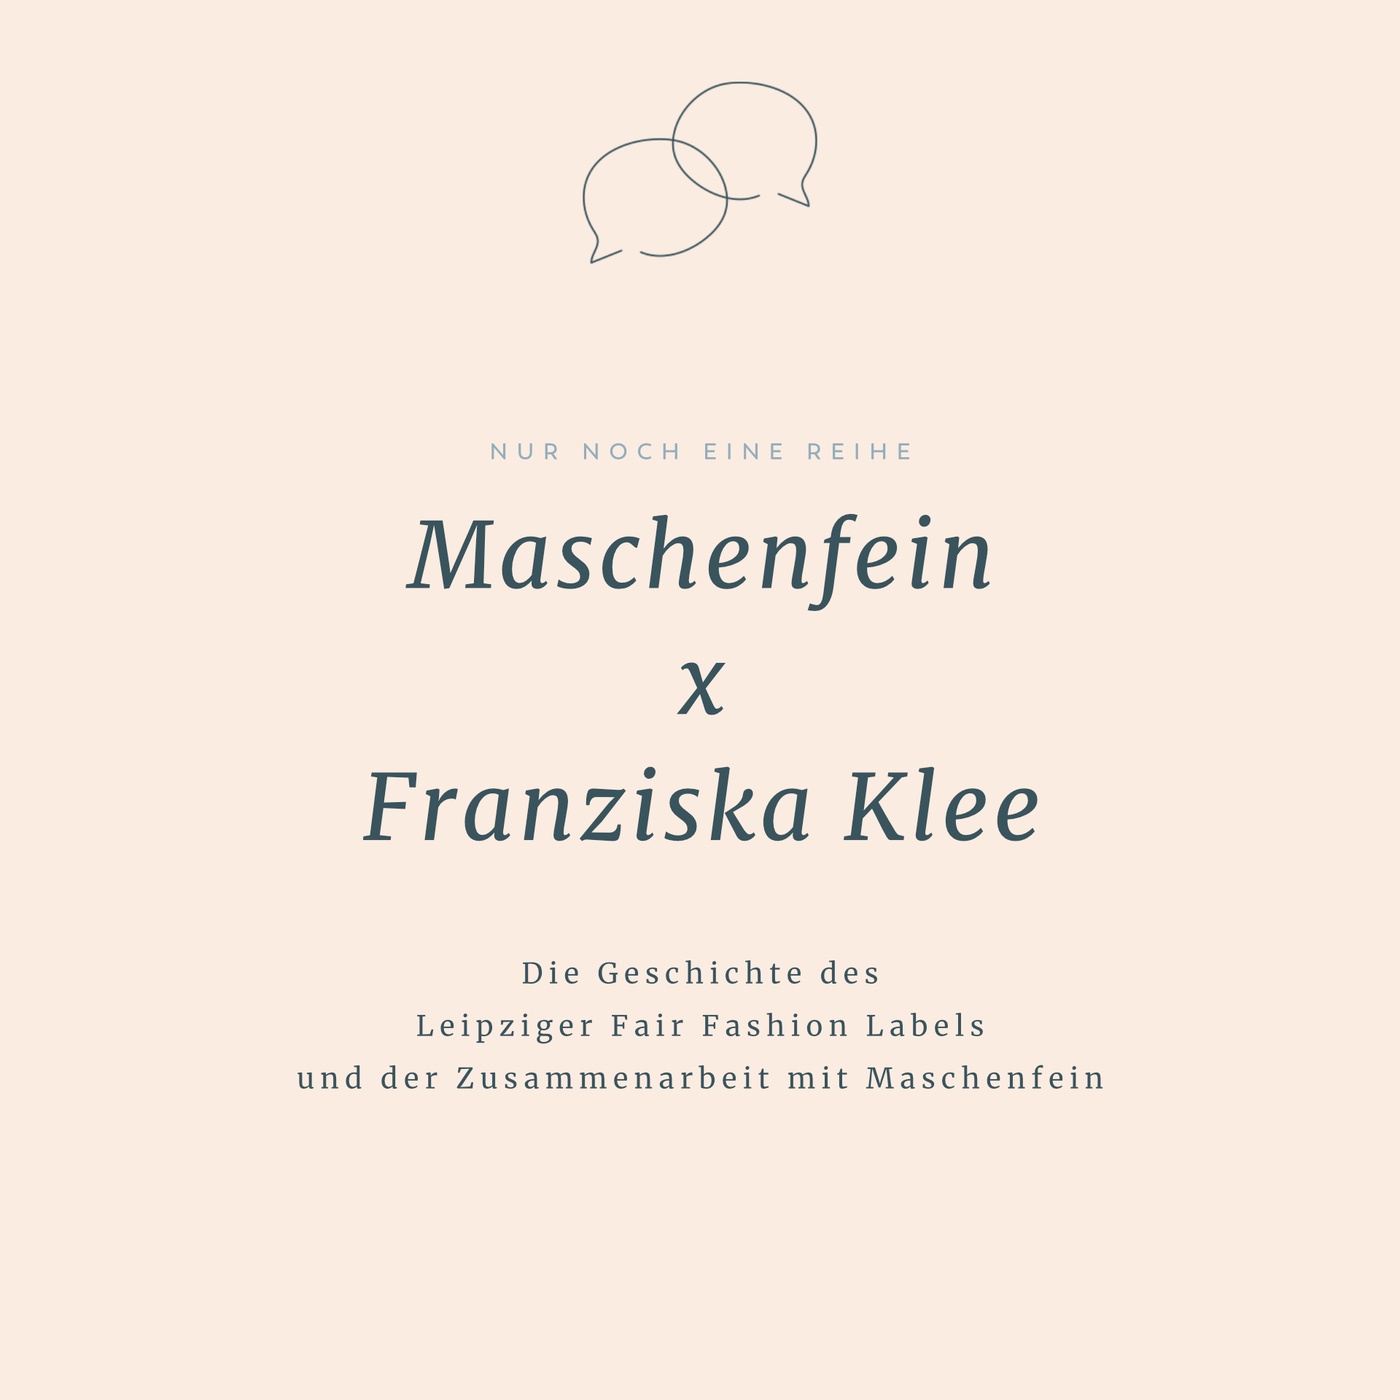 Maschenfein x Franziska Klee